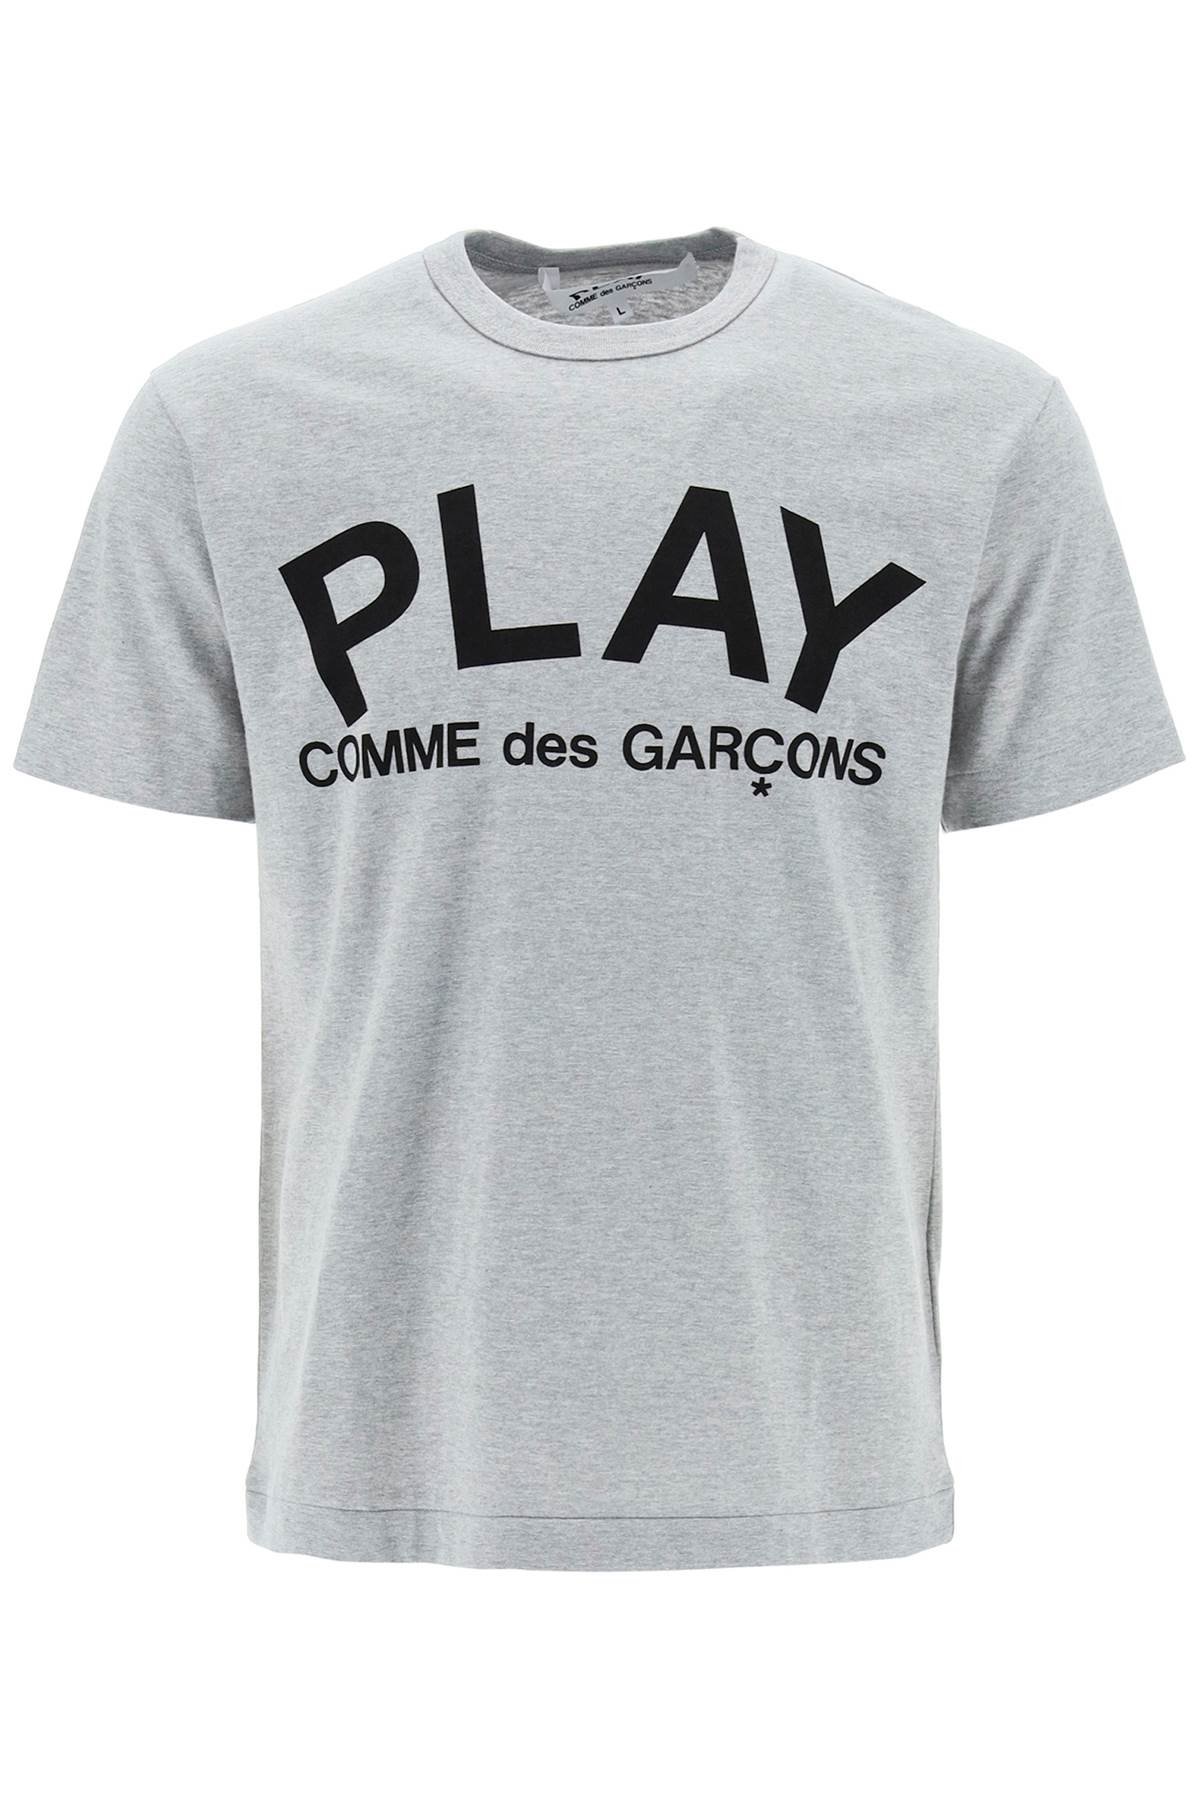 Comme des Garçons Play T-shirt With Play Print